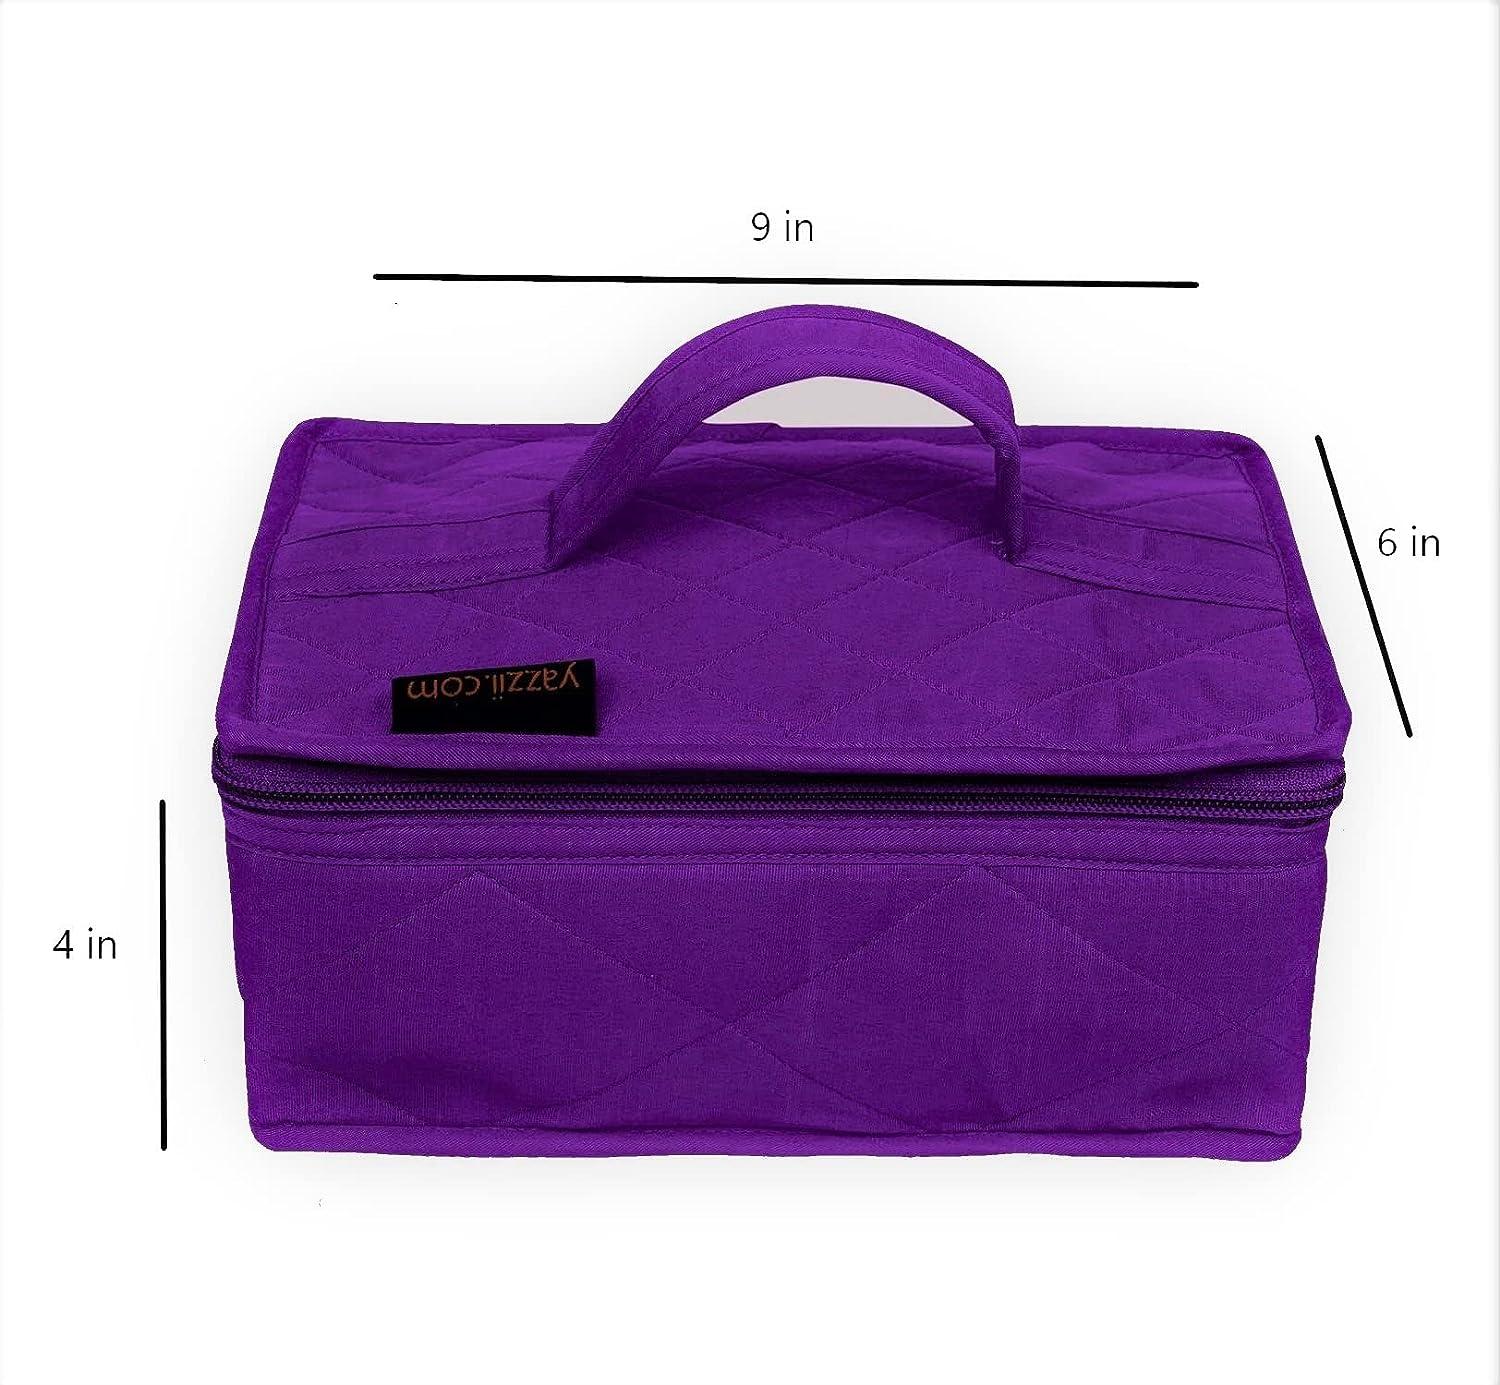 Yazzii 4 Pocket Crafter s Organizer Tote Arts & Crafts Storage Tote Bag -  Multipurpose Storage Organizer for Crafts Sewing Jewelry Make Up Purple